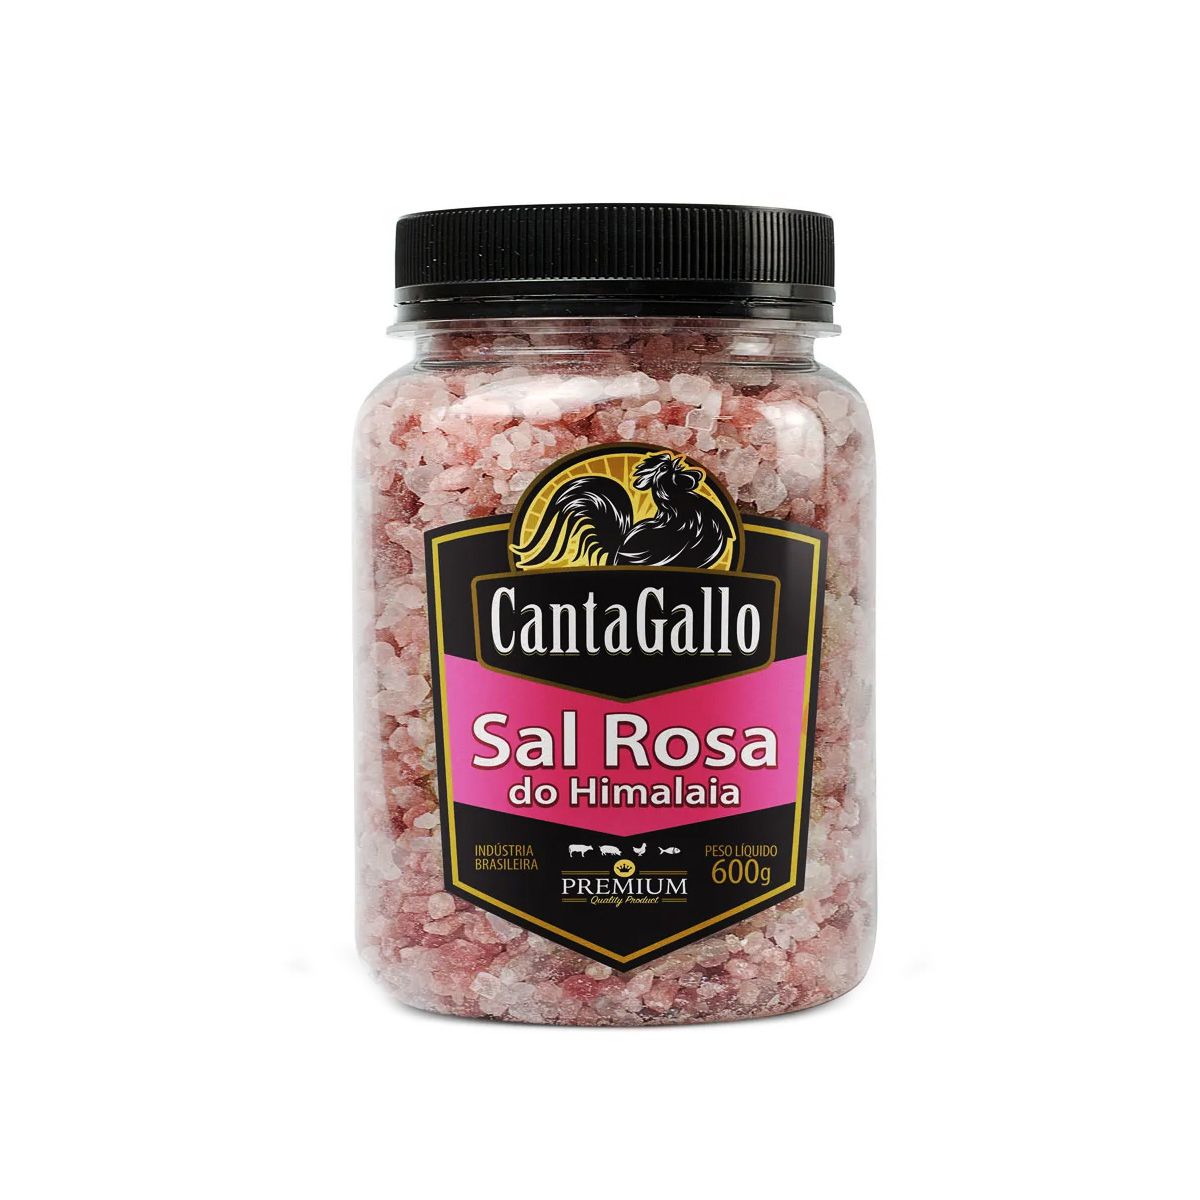 Sal Rosa CantaGallo do Himalaia Grosso Premium 600g